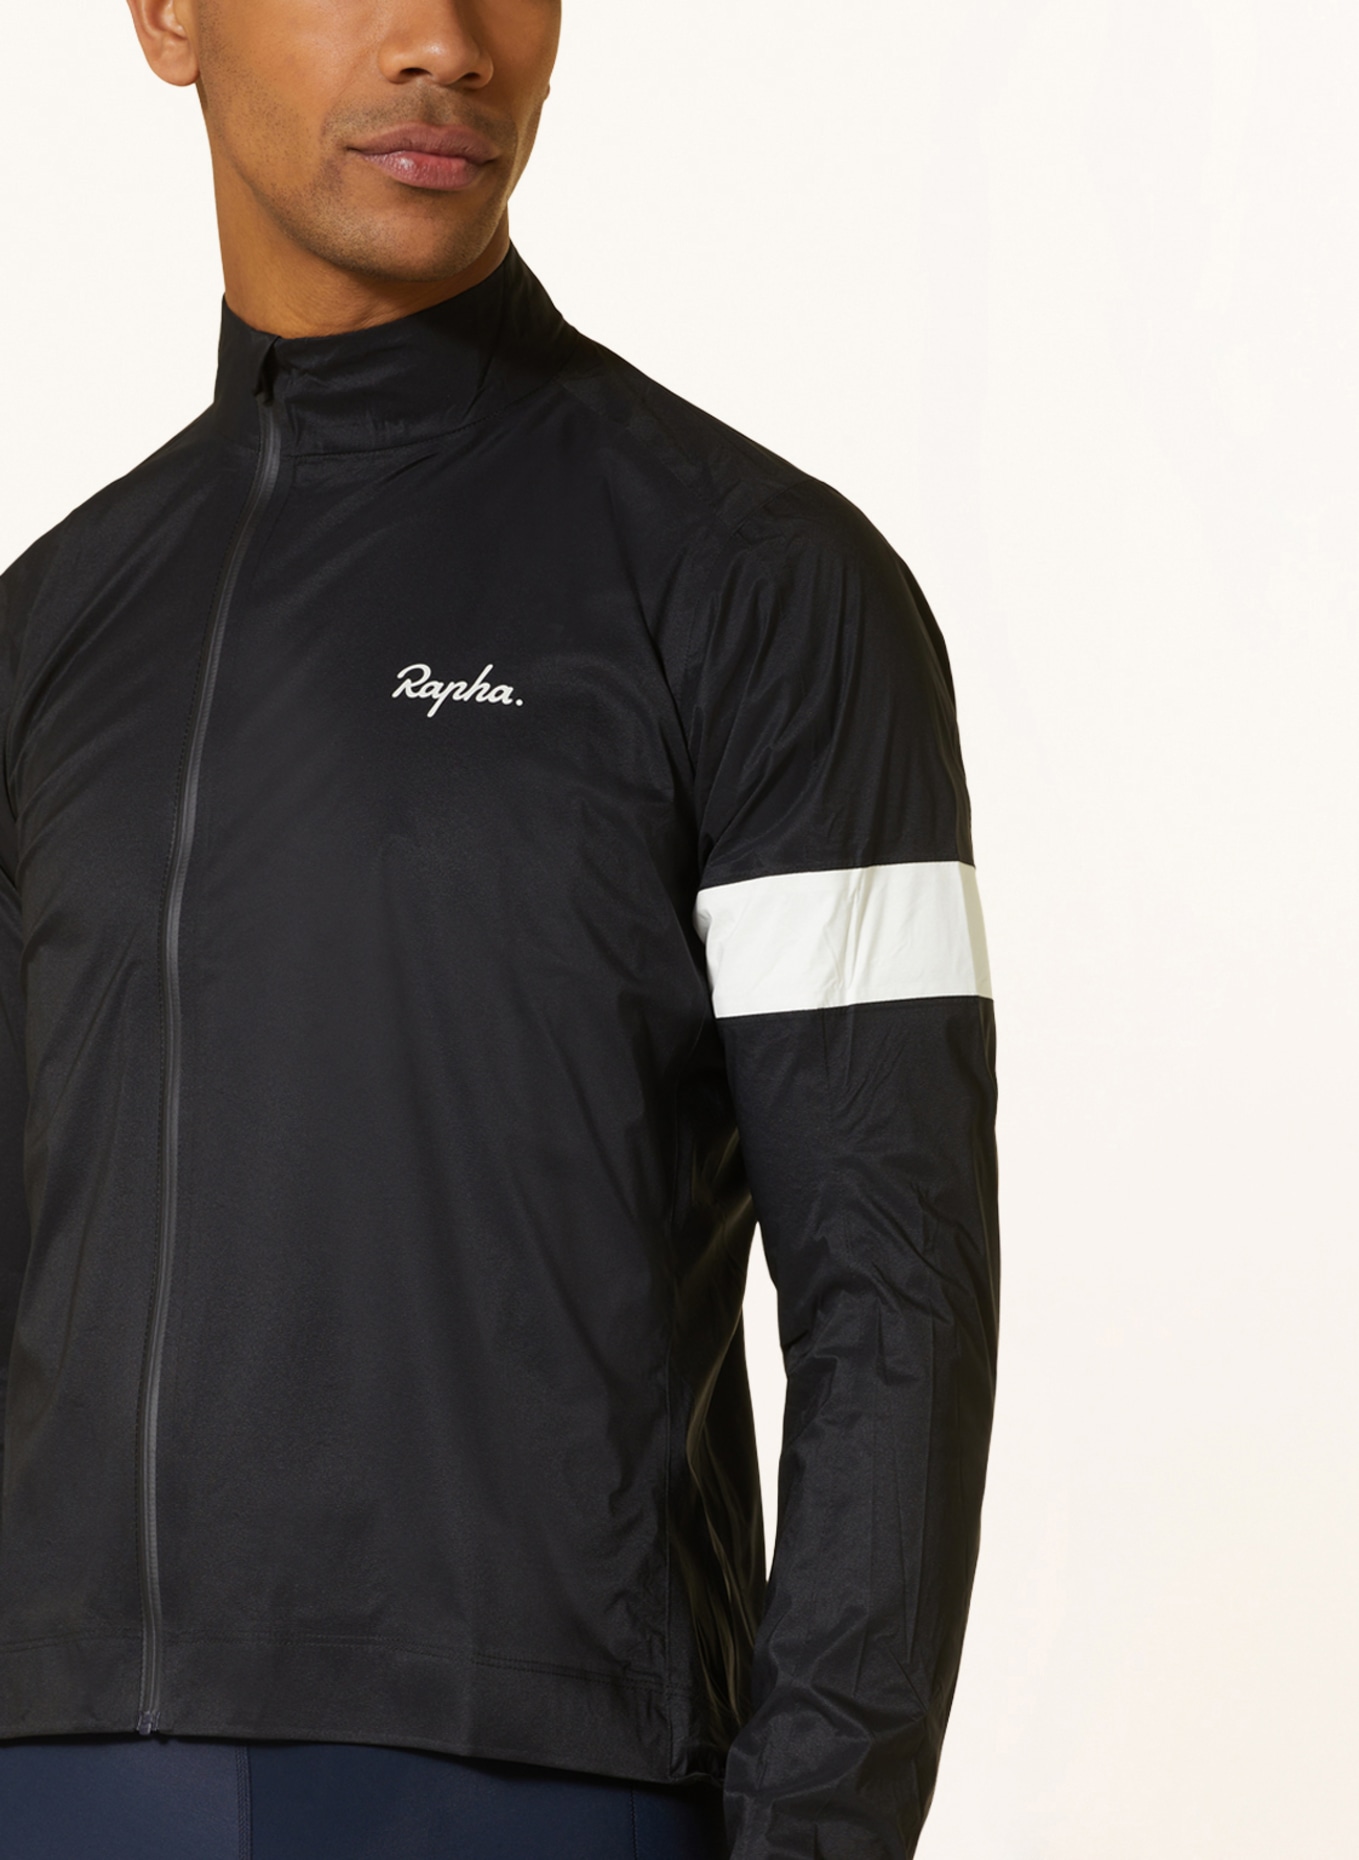 Rapha Cycling jacket CORE RAIN II in black/ white